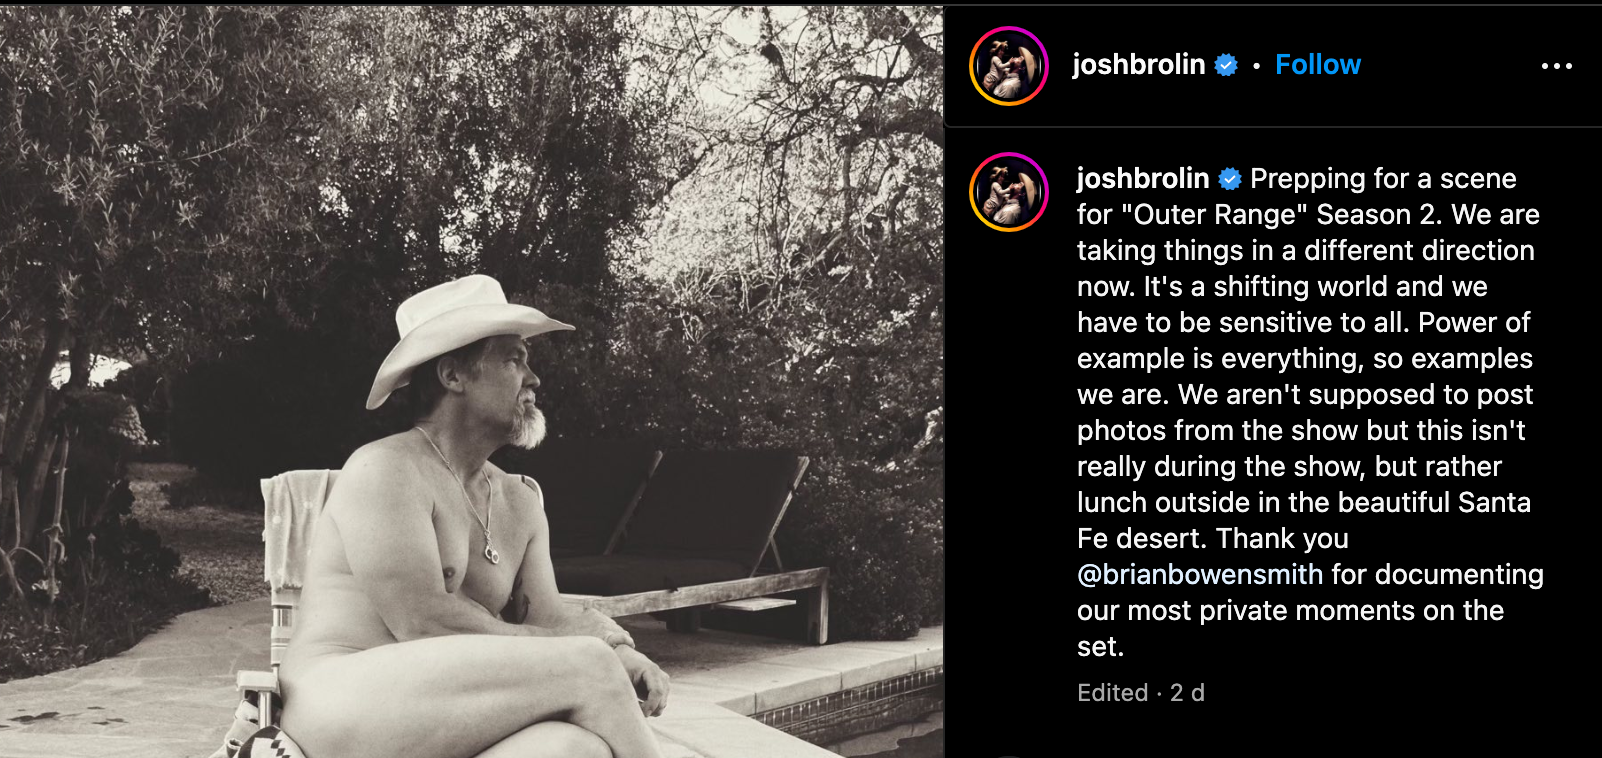 Josh Brolin poses nude on Instagram